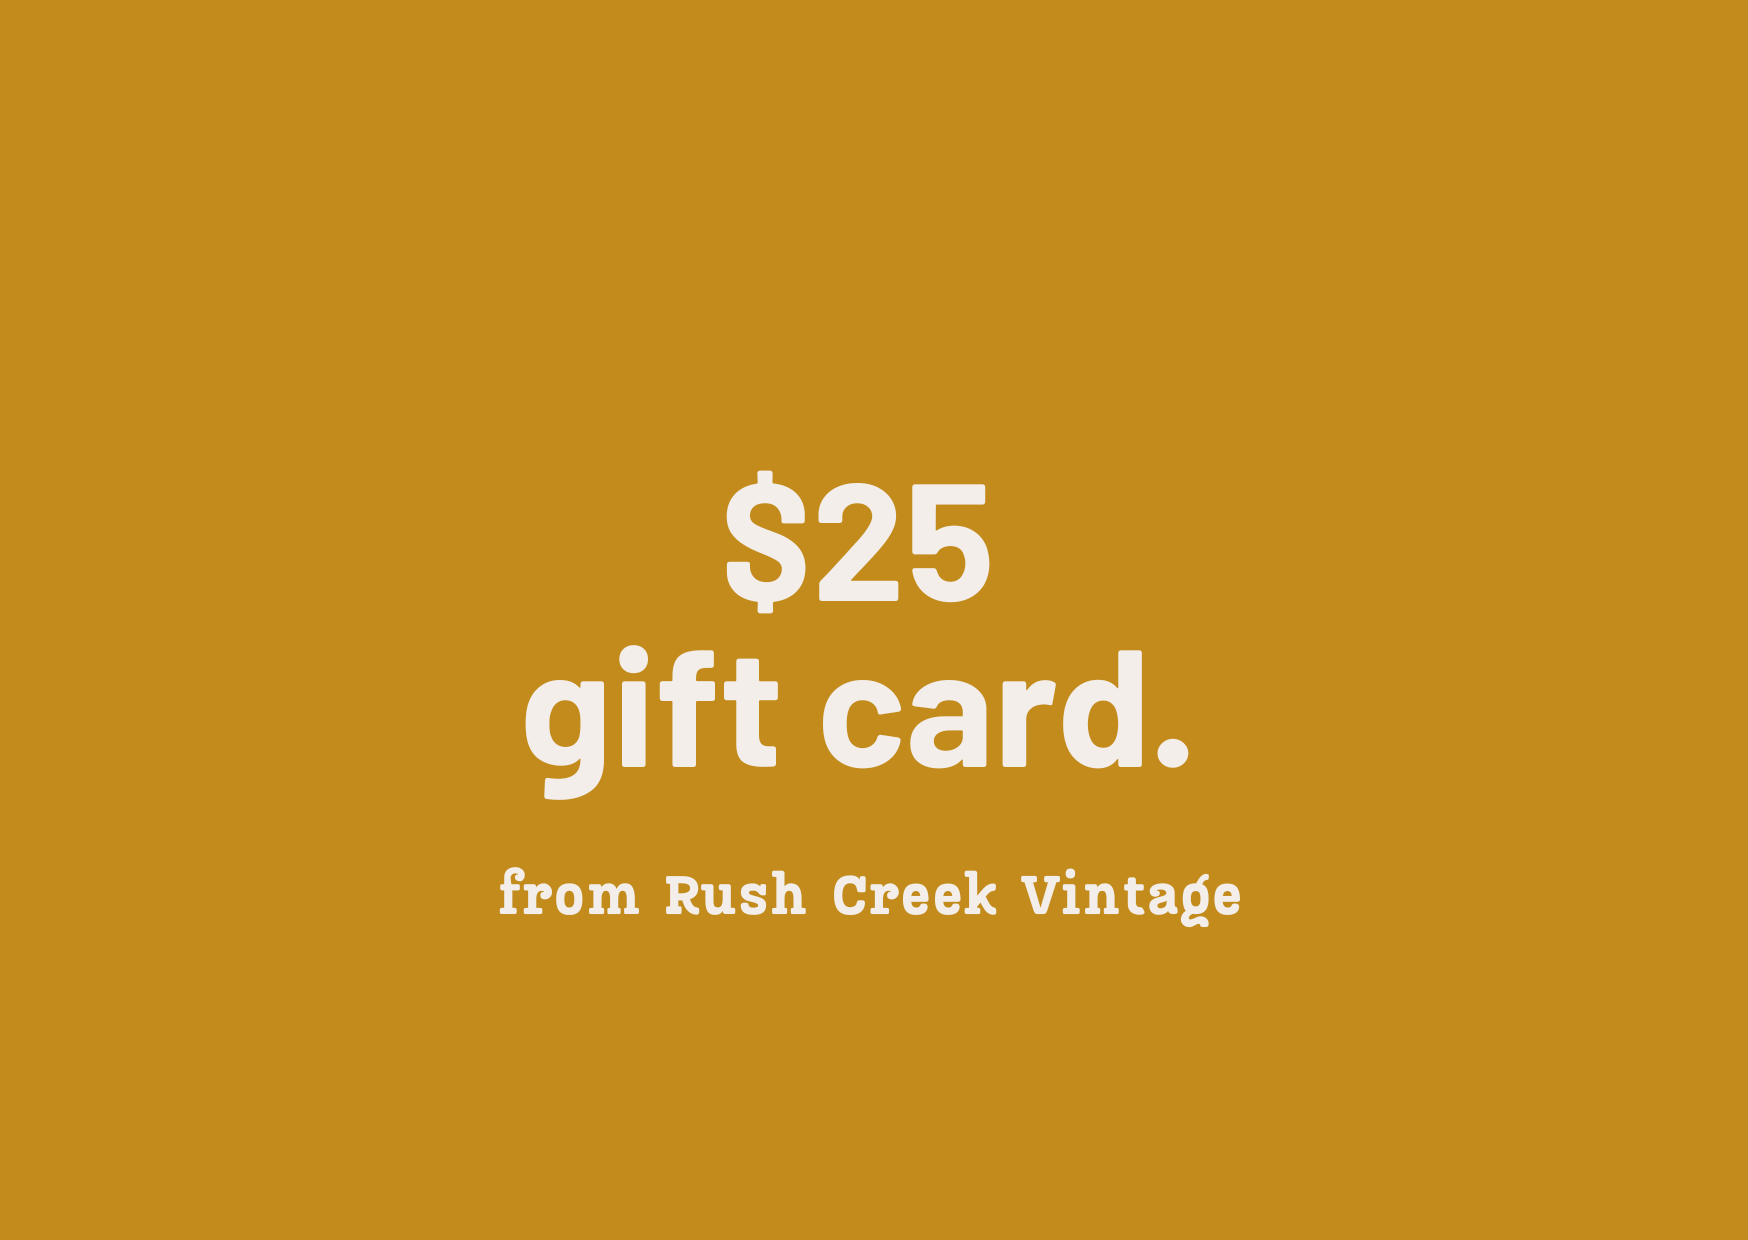 $25 Gift Card to Rush Creek Vintage